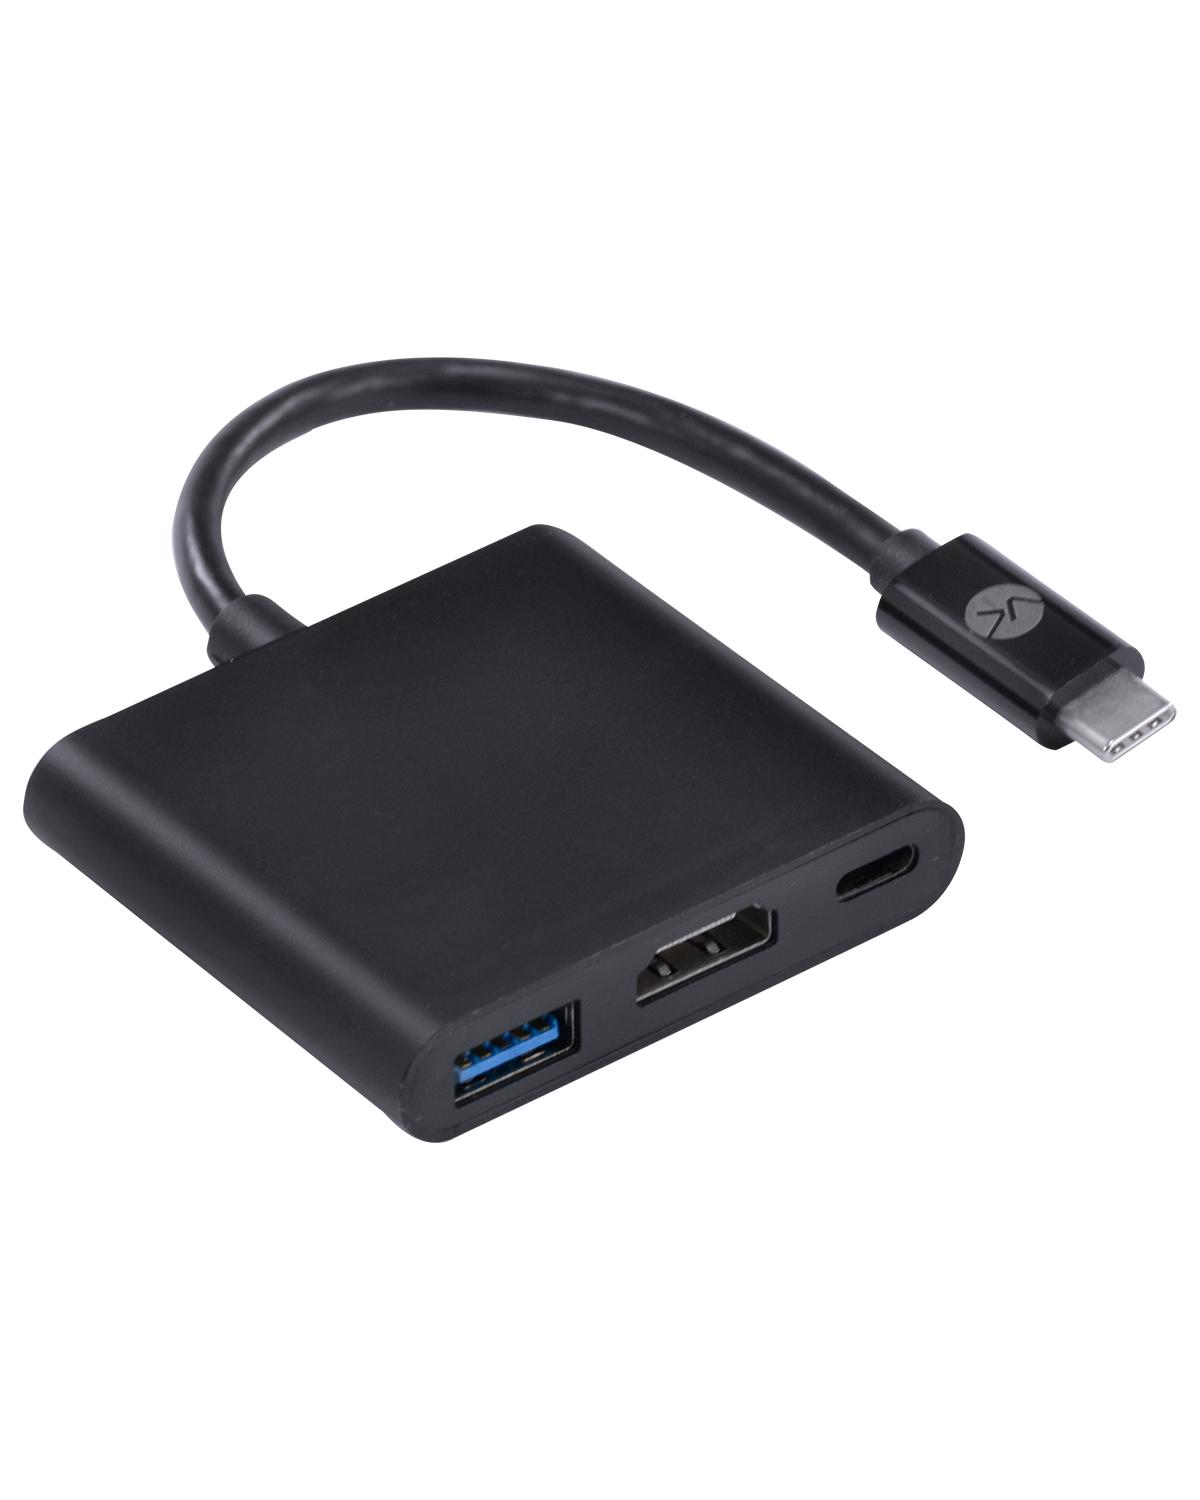 ADAPTADOR HUB USB TIPO C X USB TIPO C, HDMI 4K, USB 3.0,  5GBPS 20CM - HCHUC-20